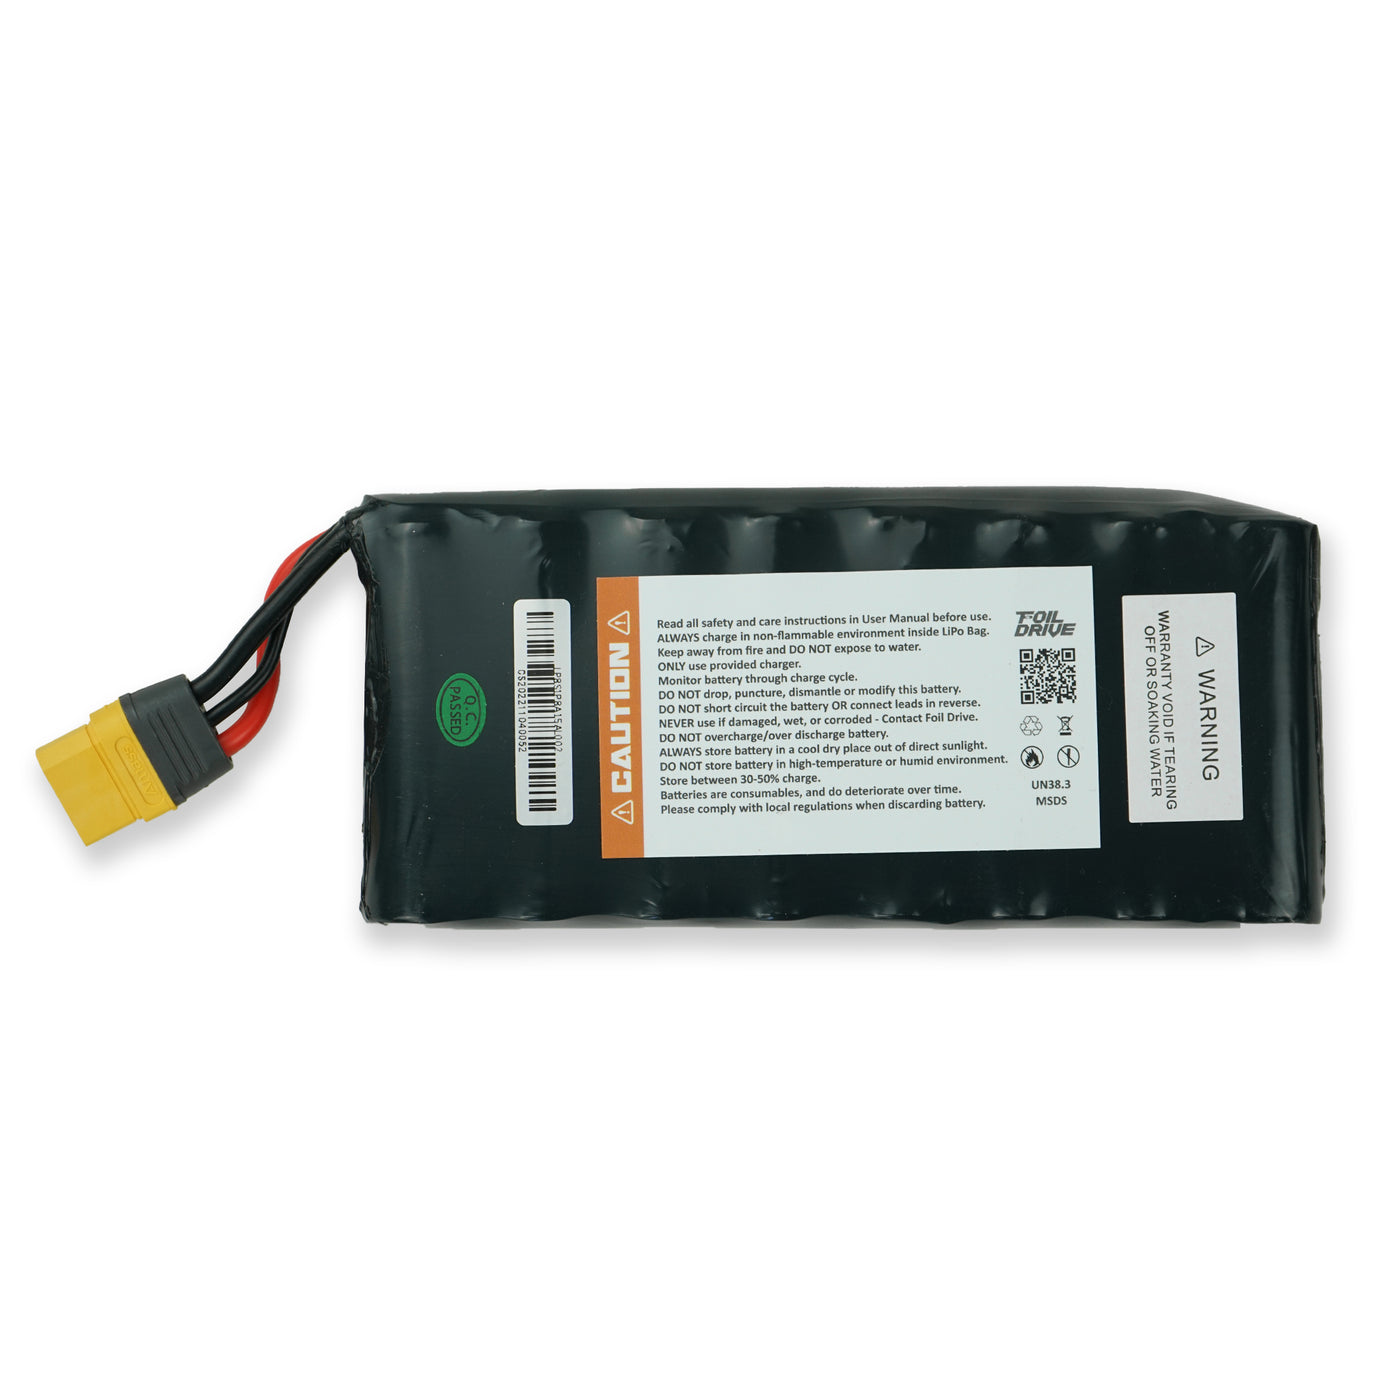    Foil-Drive-Assist-PLUS-V2-Small-Battery-S22-2